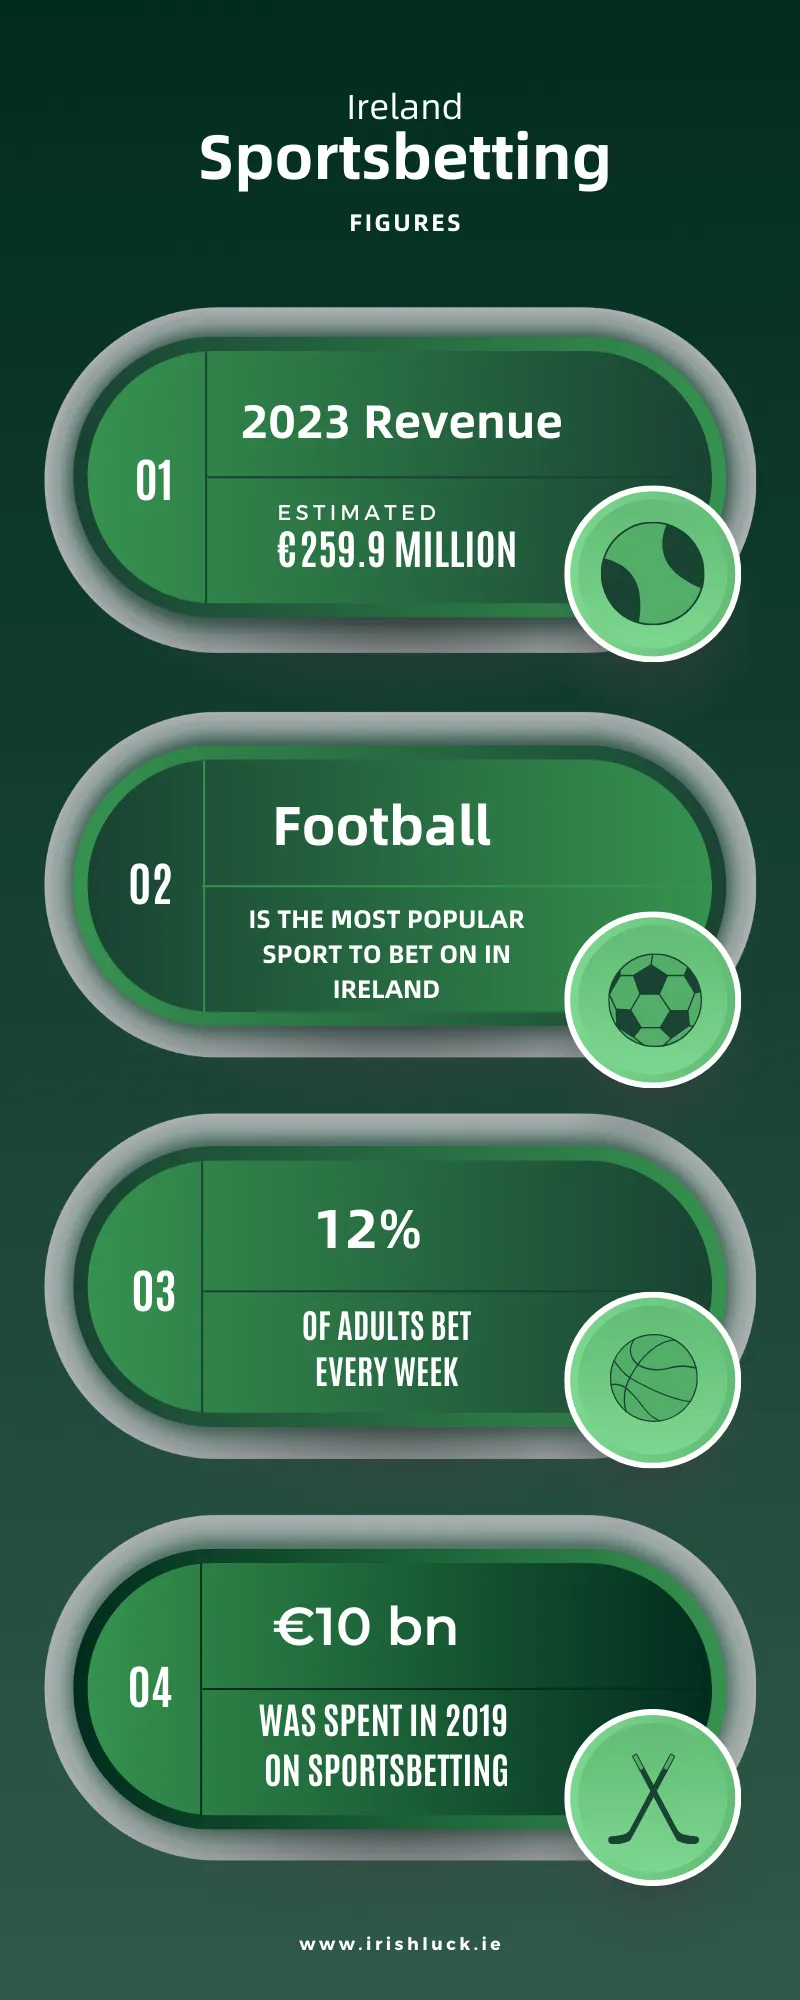 ireland sportsbetting figures fun facts